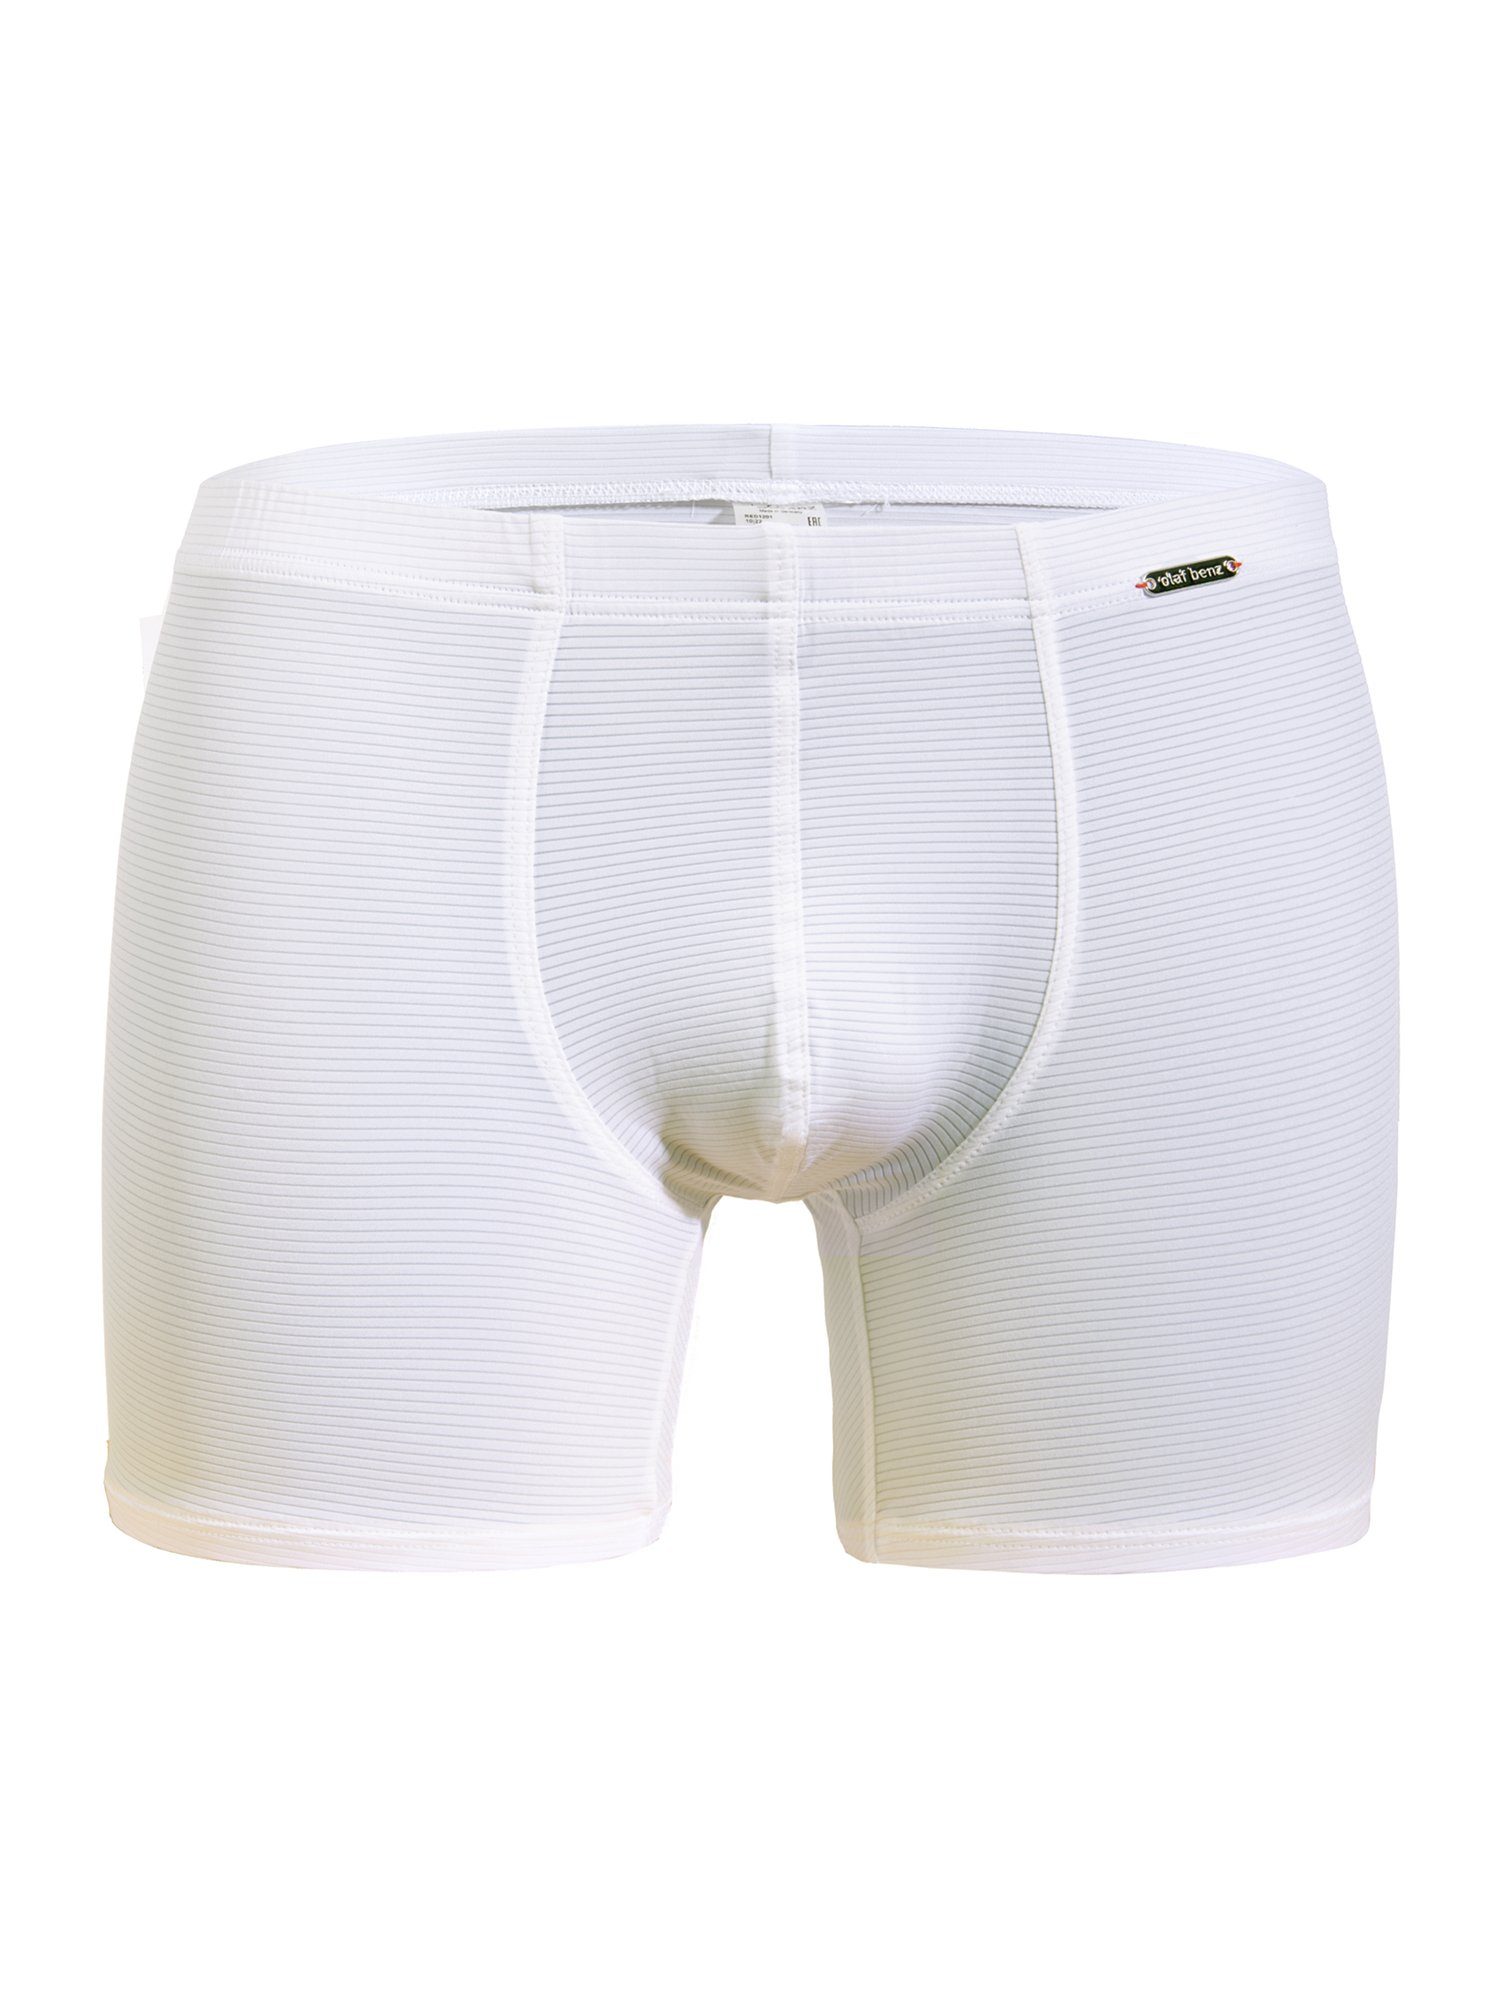 Olaf Benz Retro Boxer RED1201 Boxerpants (1-St) white